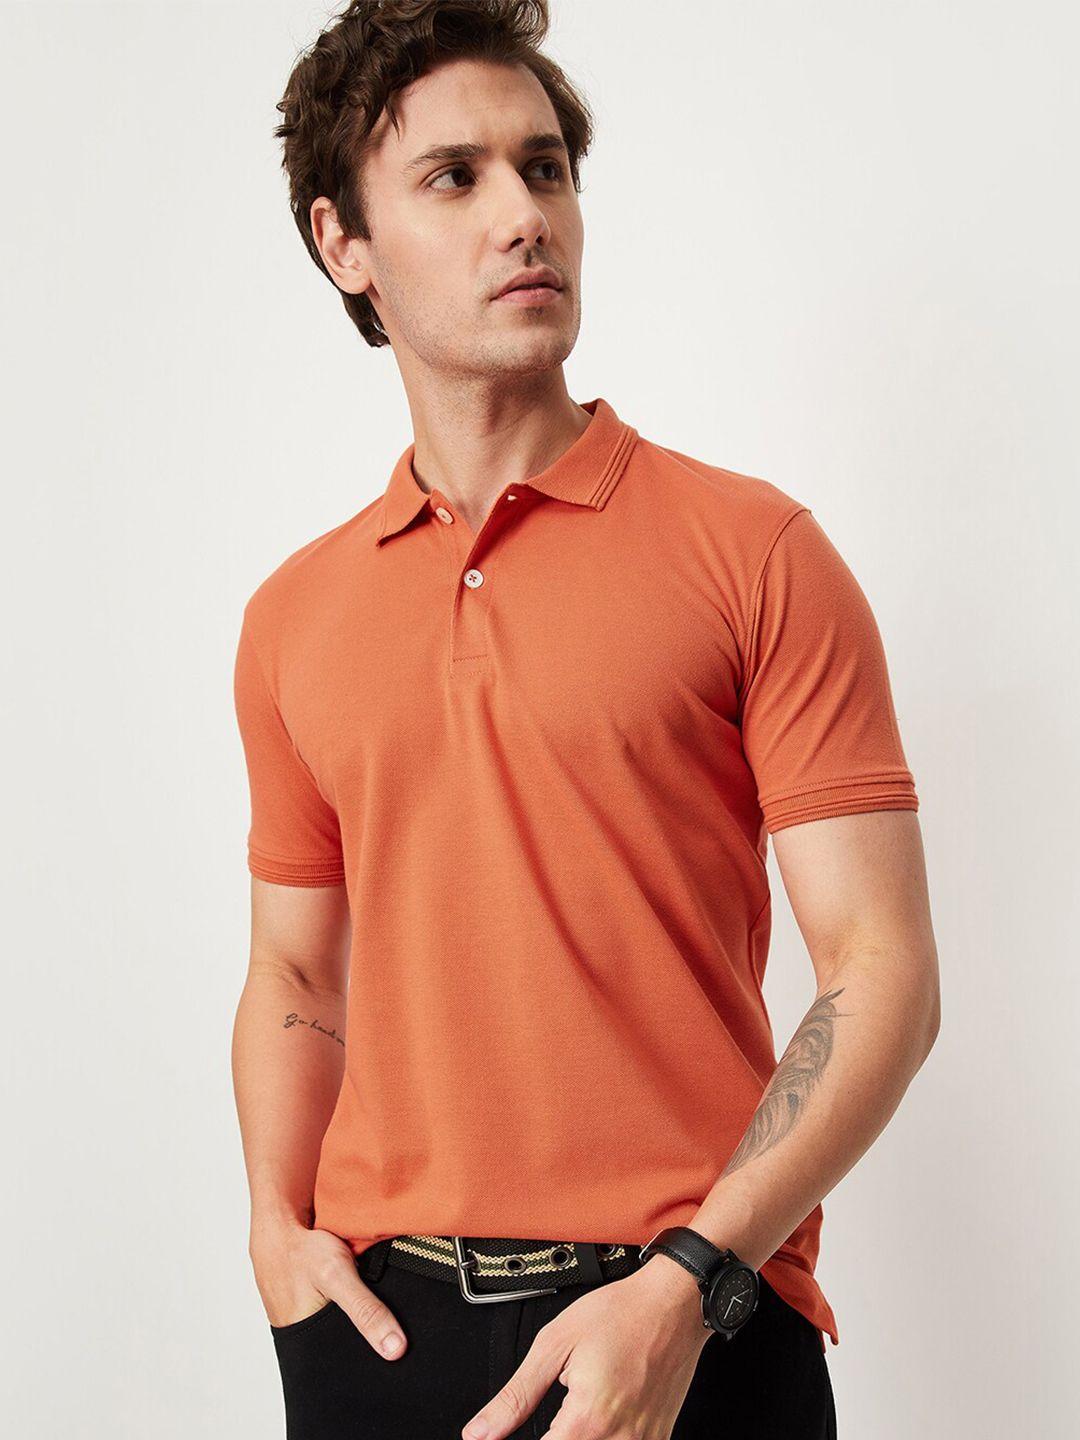 max-half-sleeve-cotton-polo-t-shirt